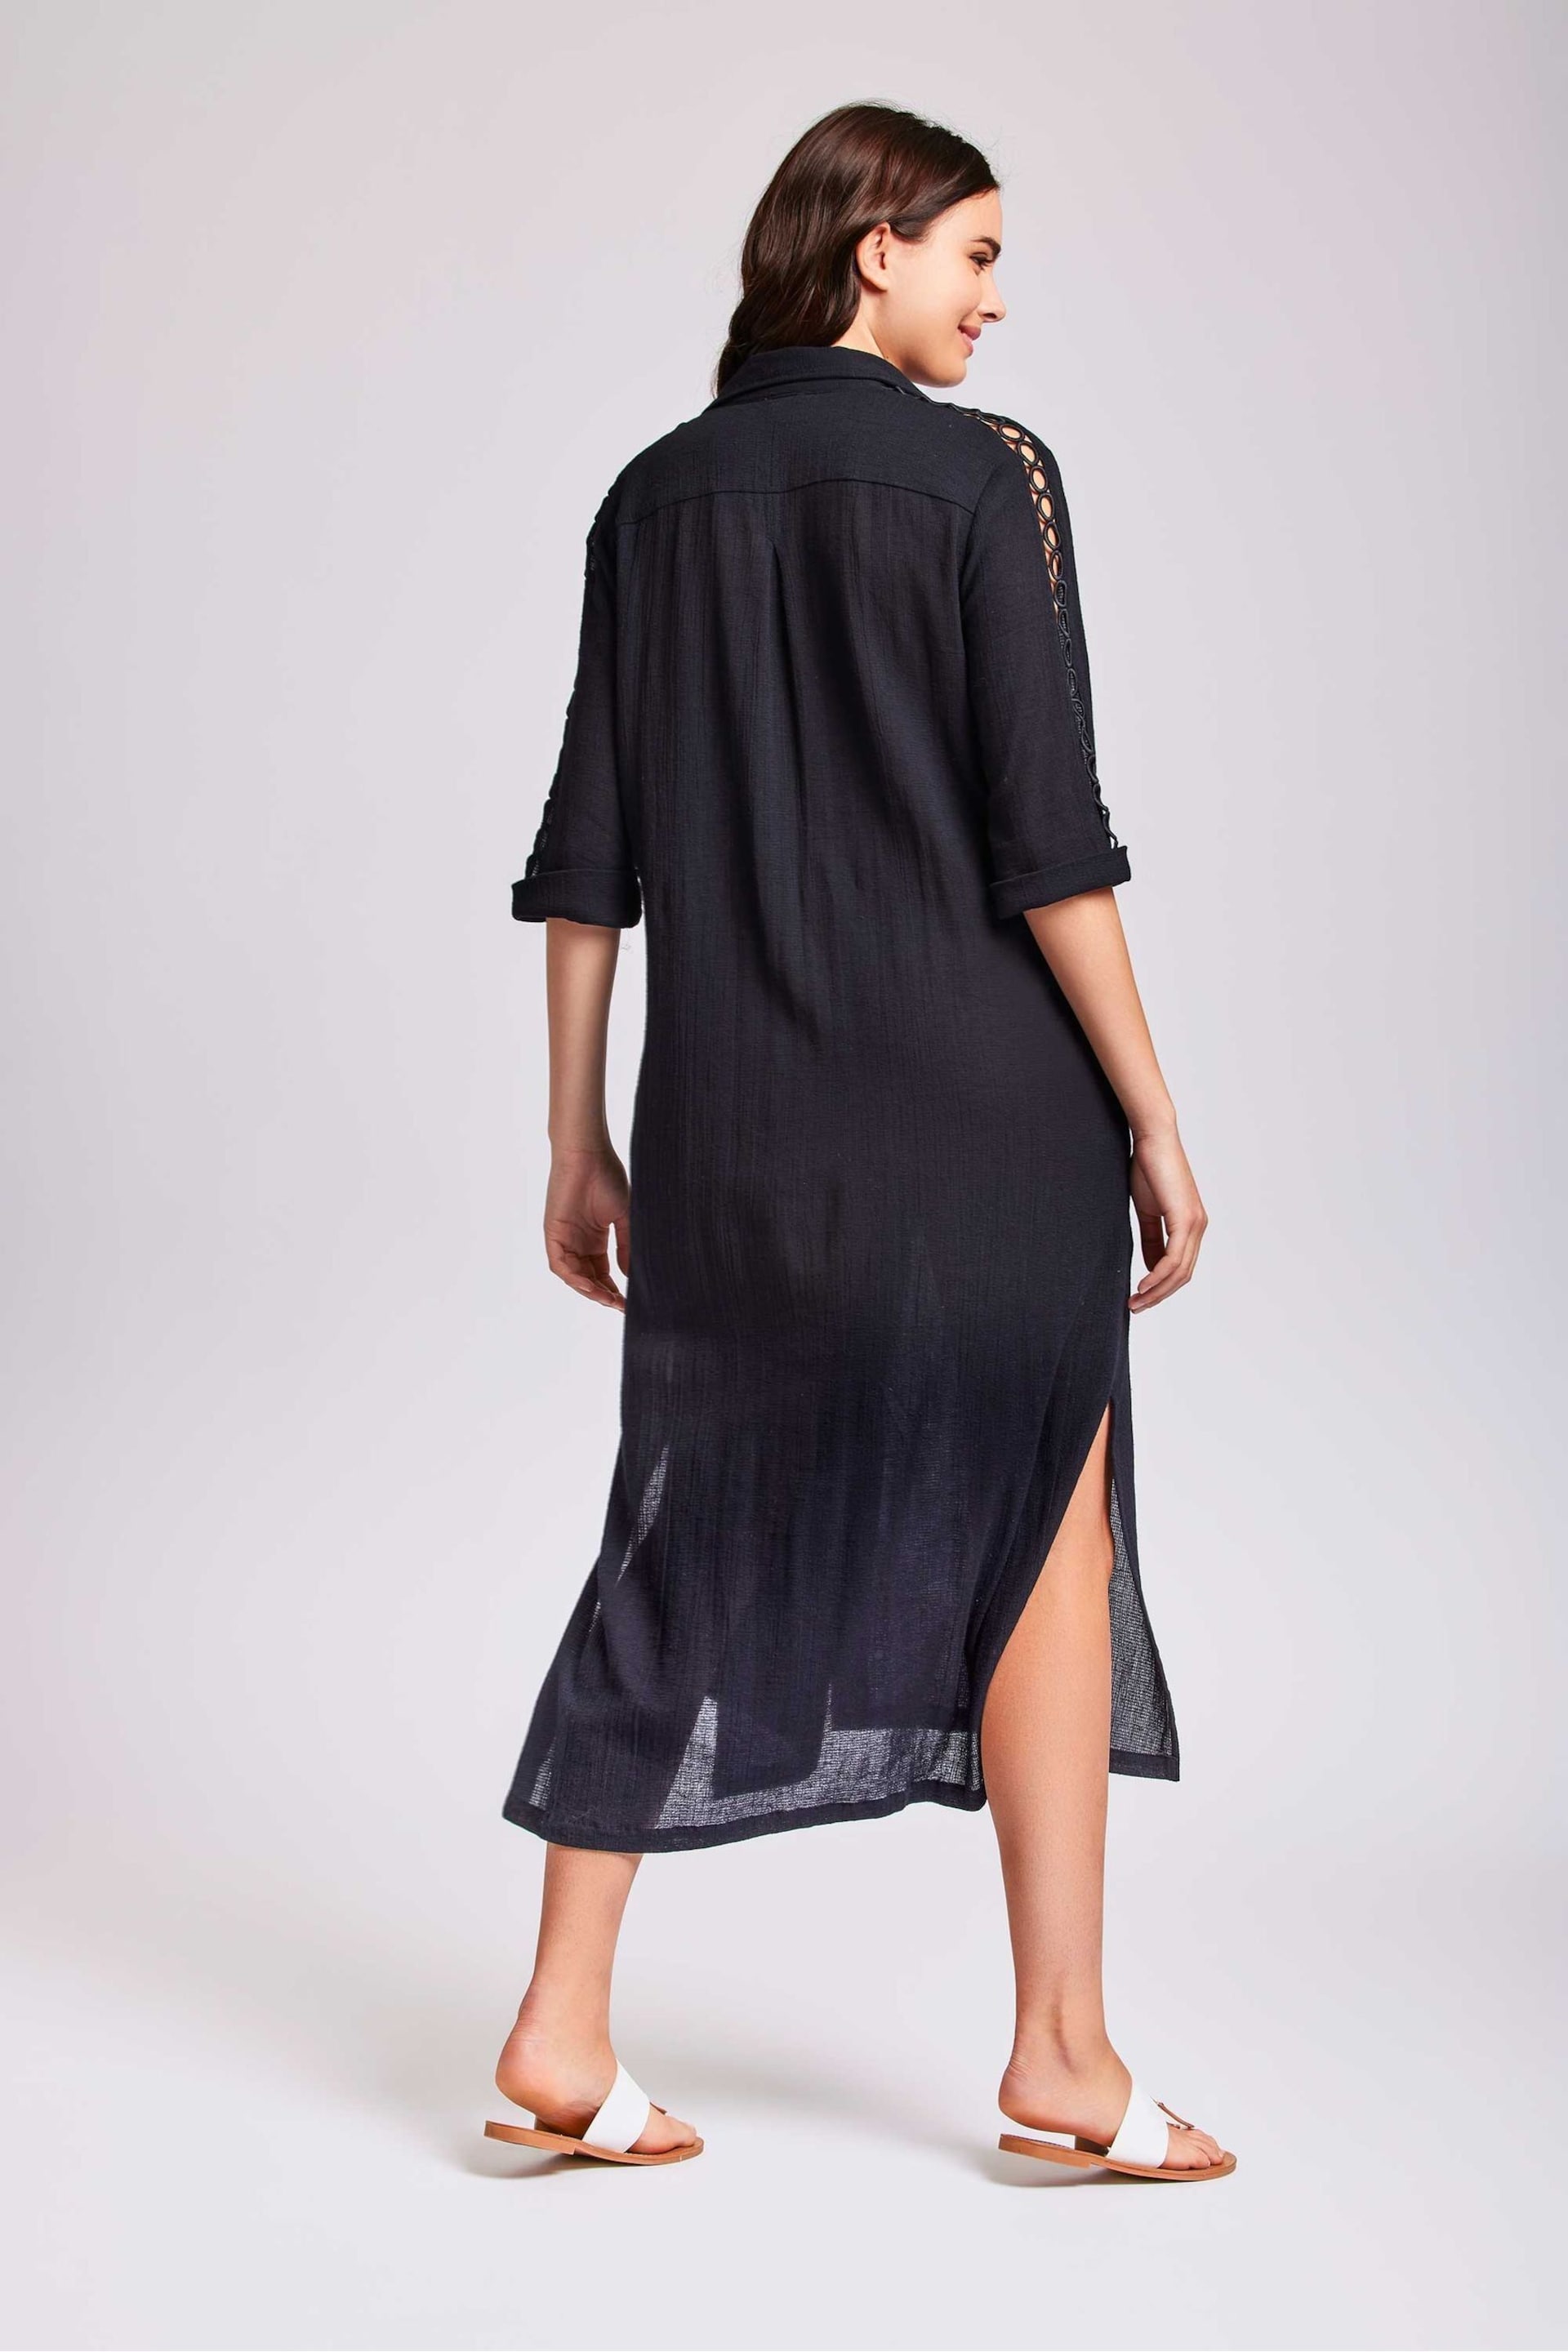 Iconique Olivia Maxi Shirt Beach Black Dress - Image 2 of 3